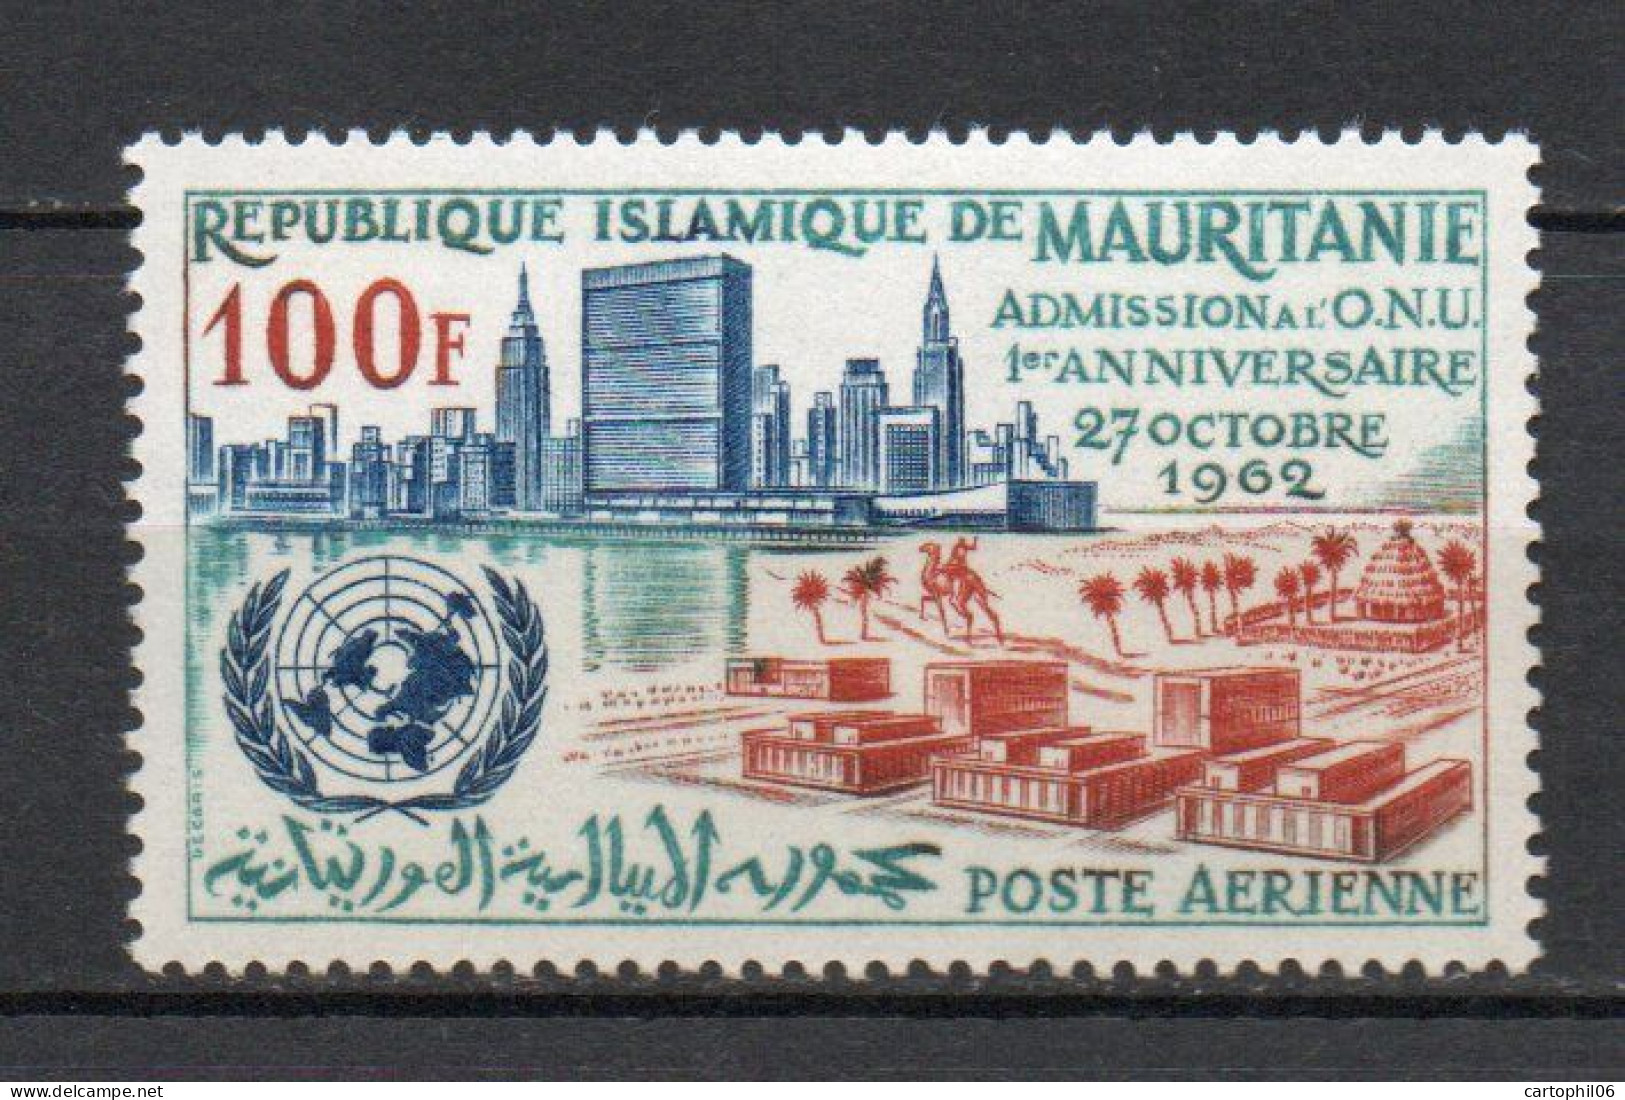 - MAURITANIE Poste Aérienne N° 22 Neuf ** MNH - 100 F. ADMISSION AUX NATIONS UNIES 1962 - - Mauritanië (1960-...)